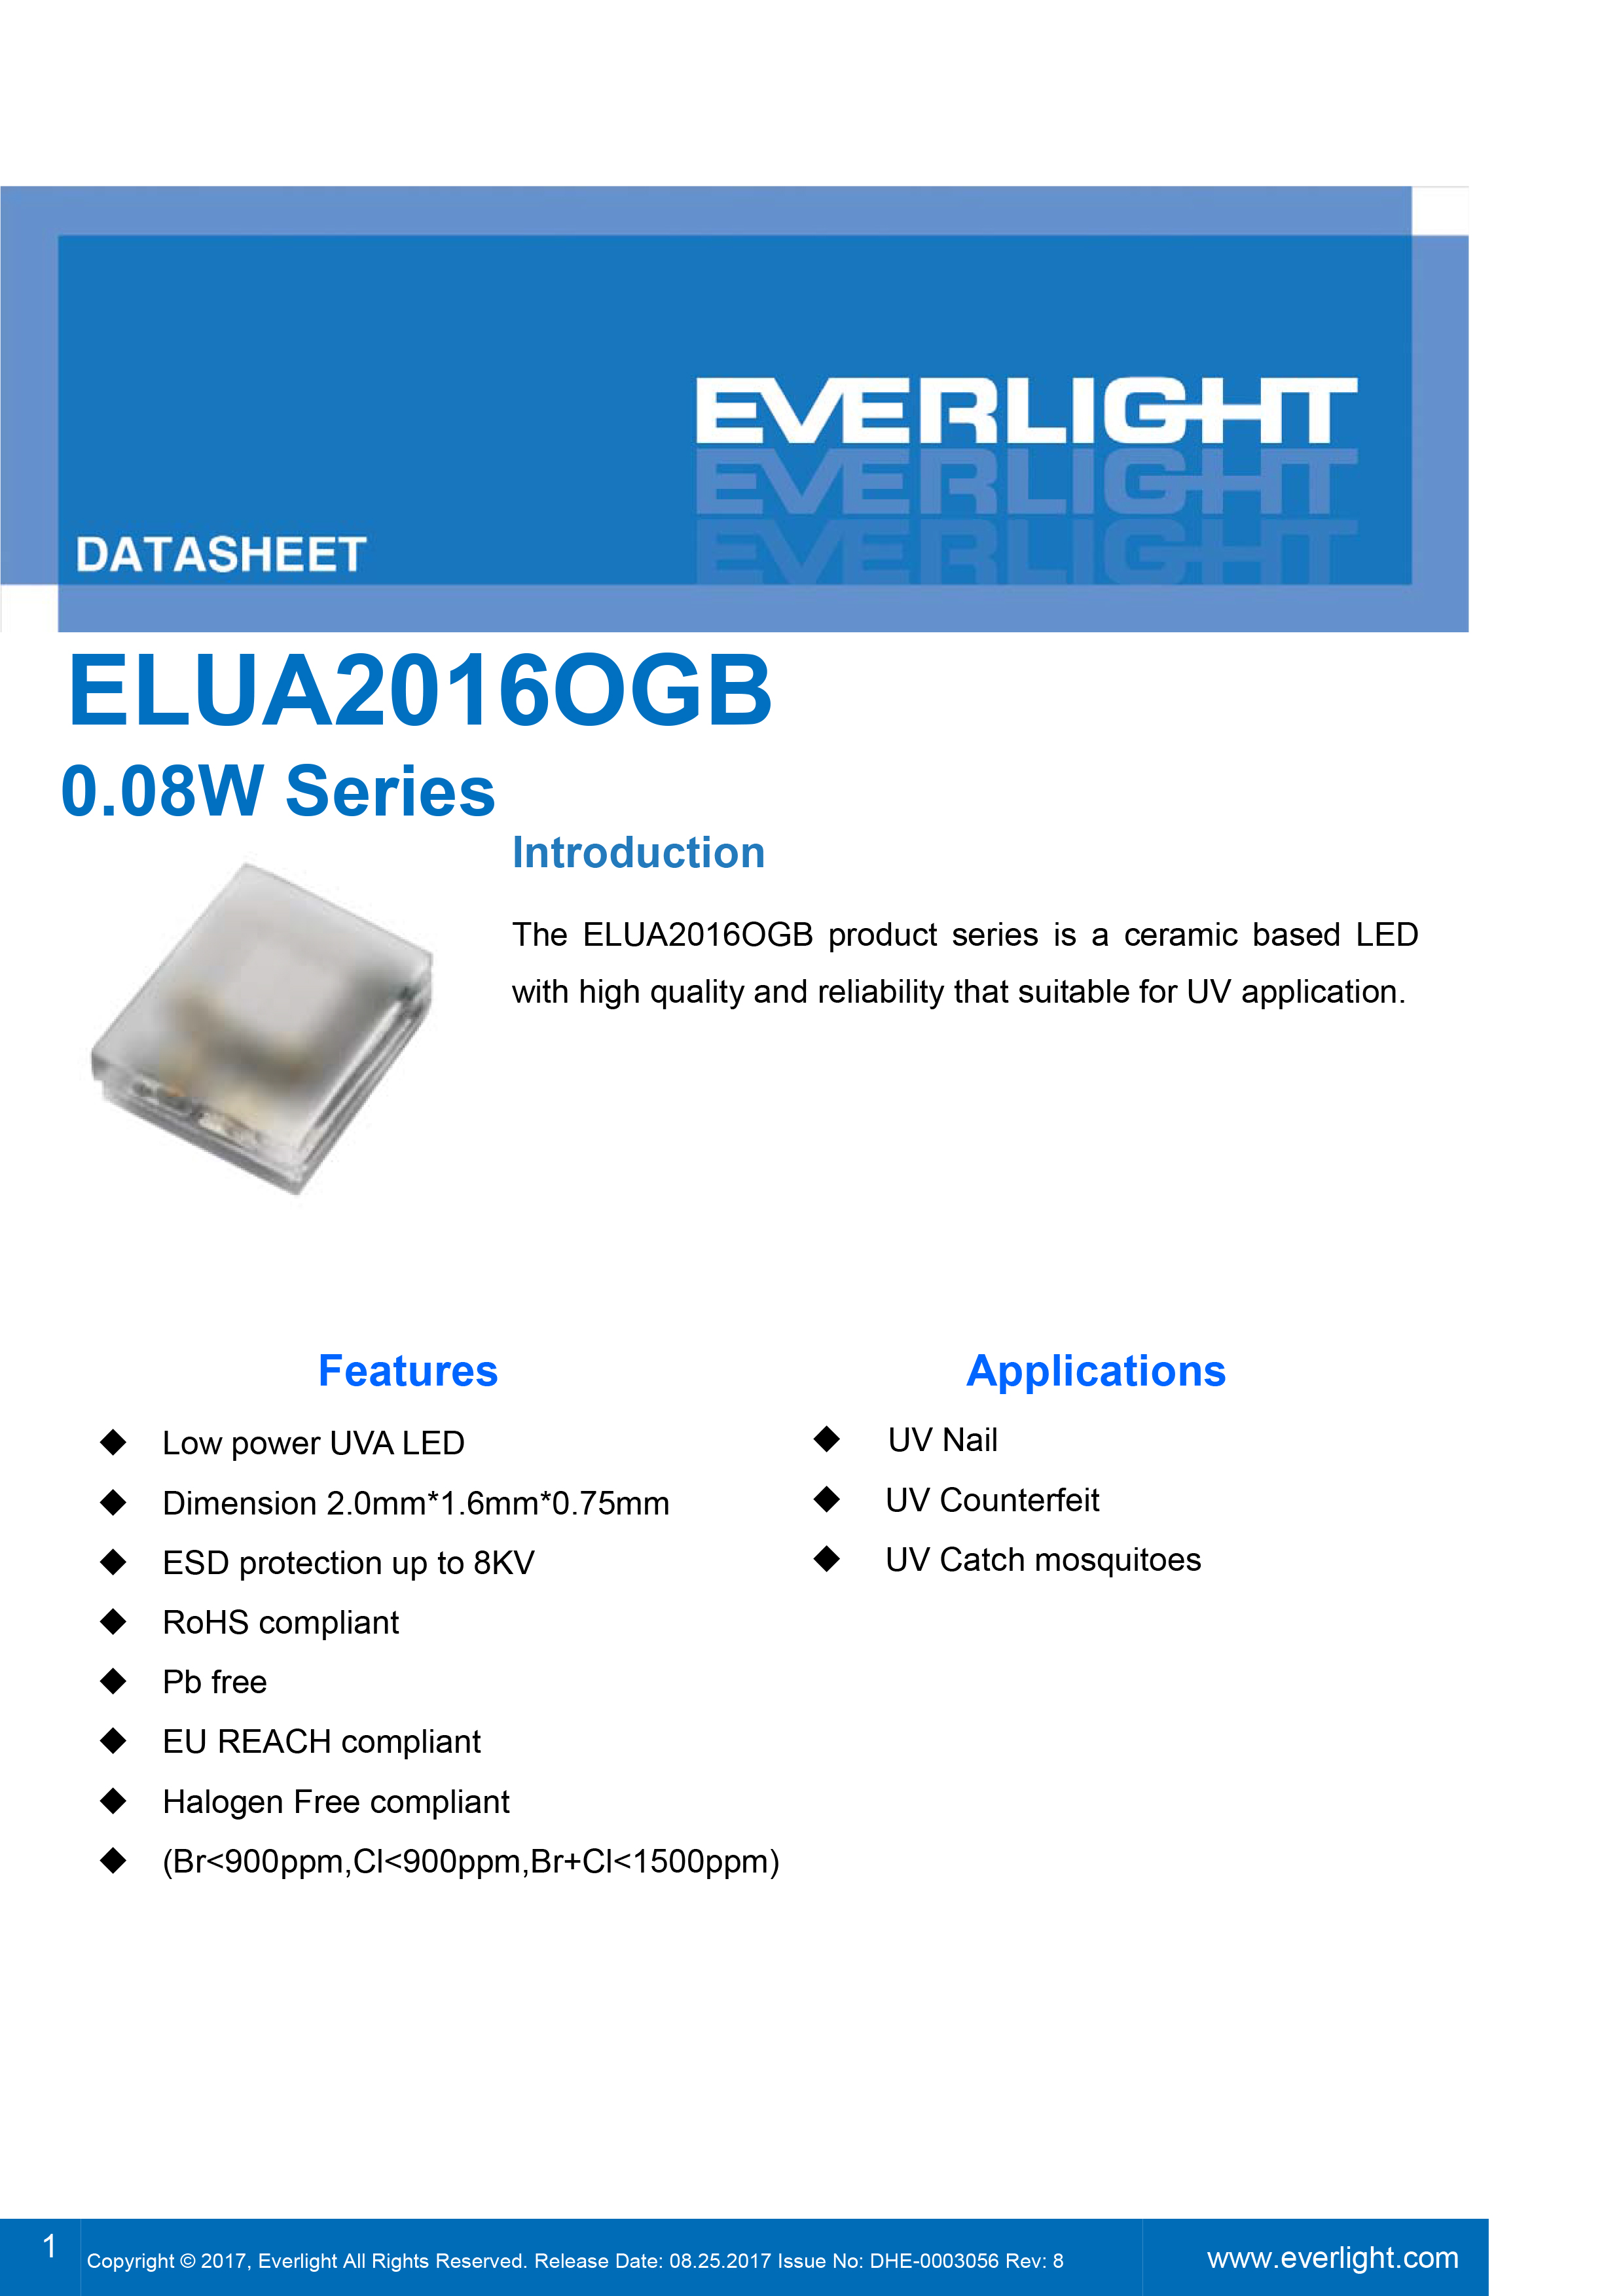 EVERLIGHT SMD 0.08W UV LED ELUA2016OGB-P8090Q53040020-VA1M Datasheet